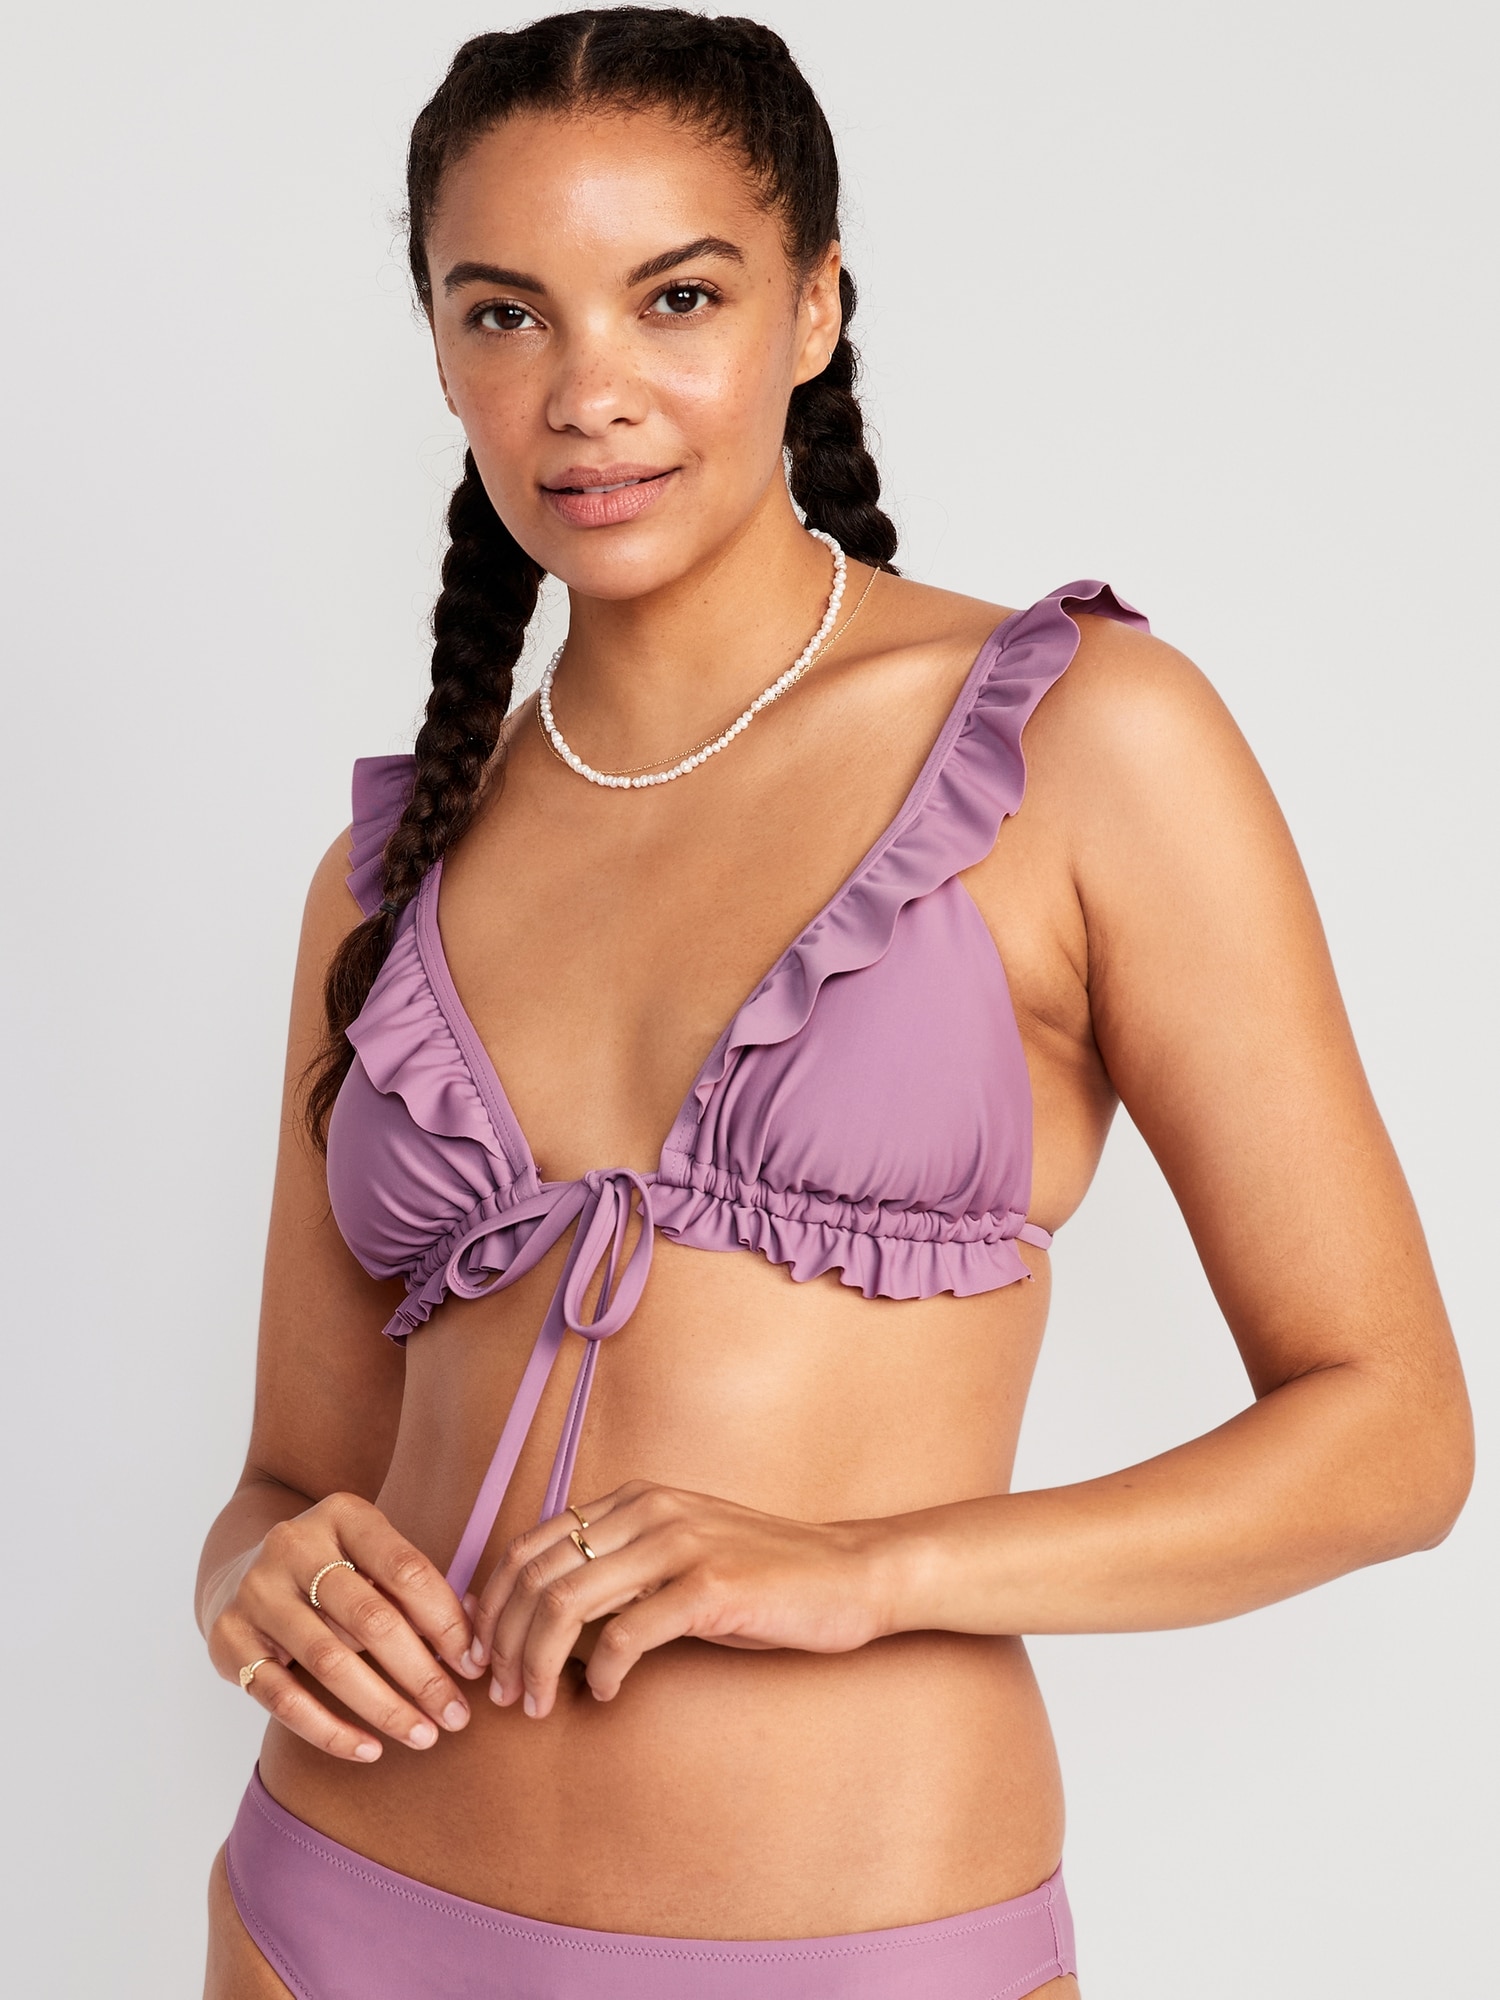 Ruffle-Trimmed String Bikini Swim Top for Women | Old Navy